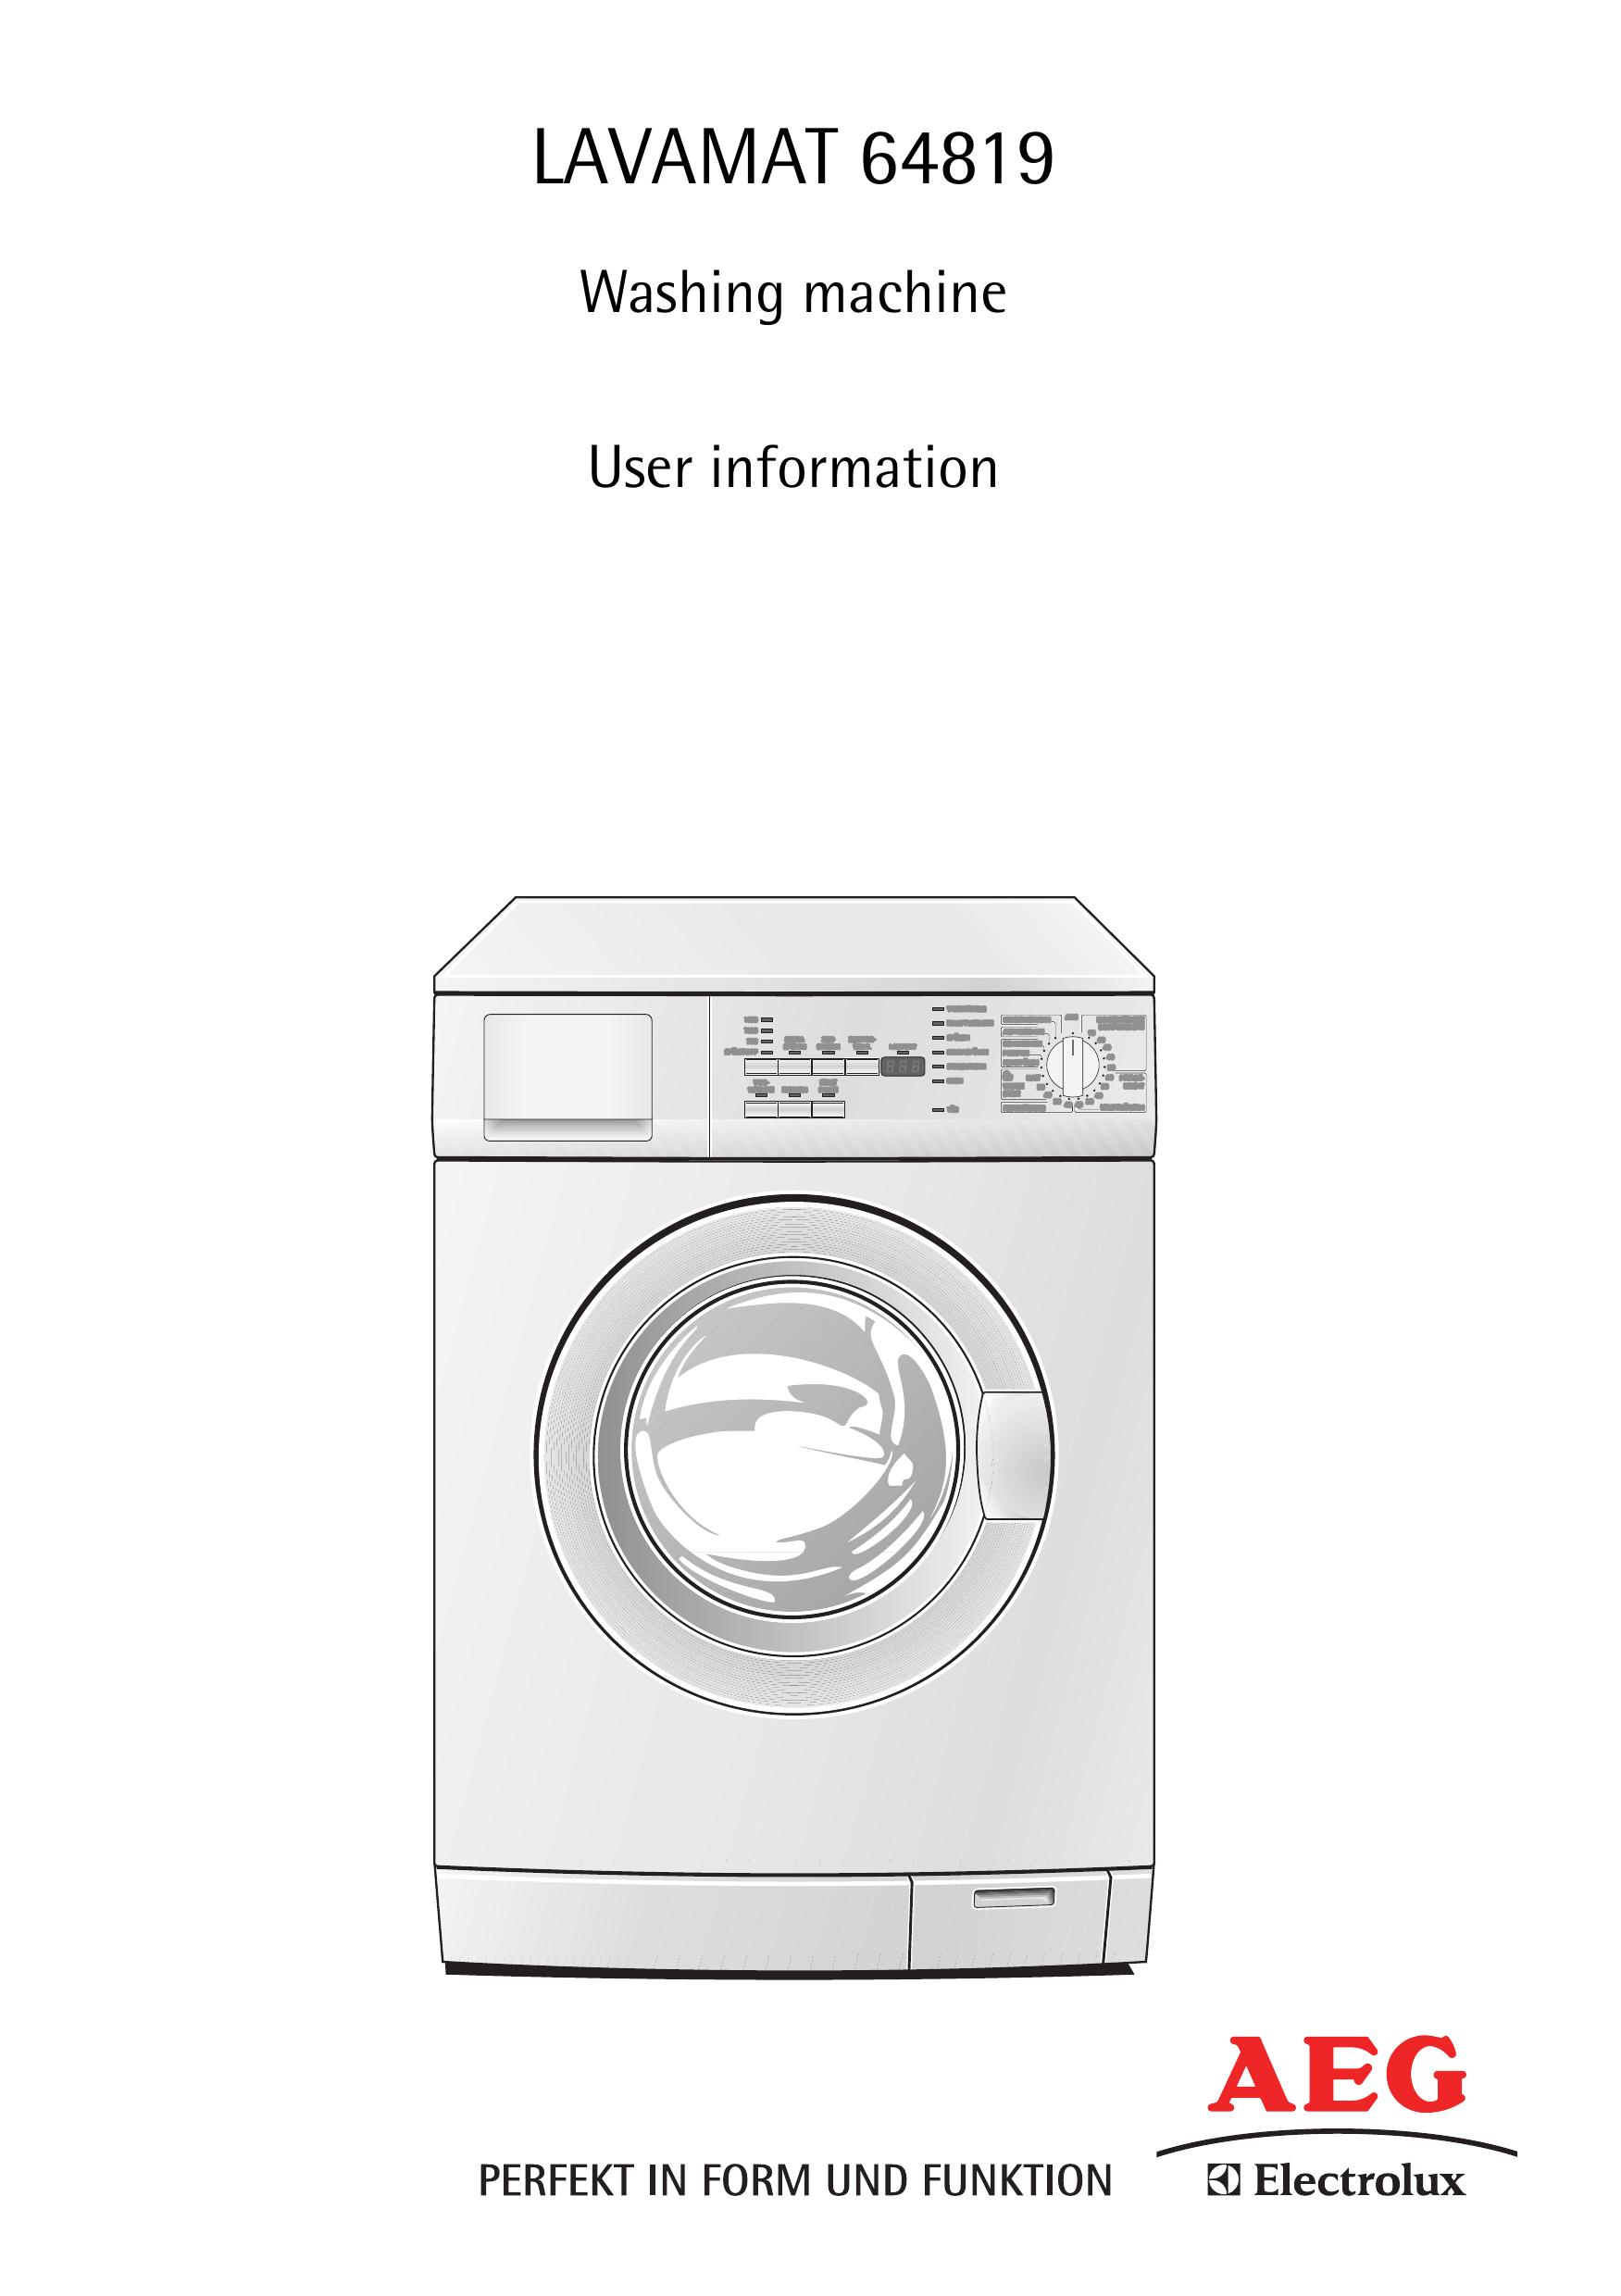 AEG 64819 Washer User Manual